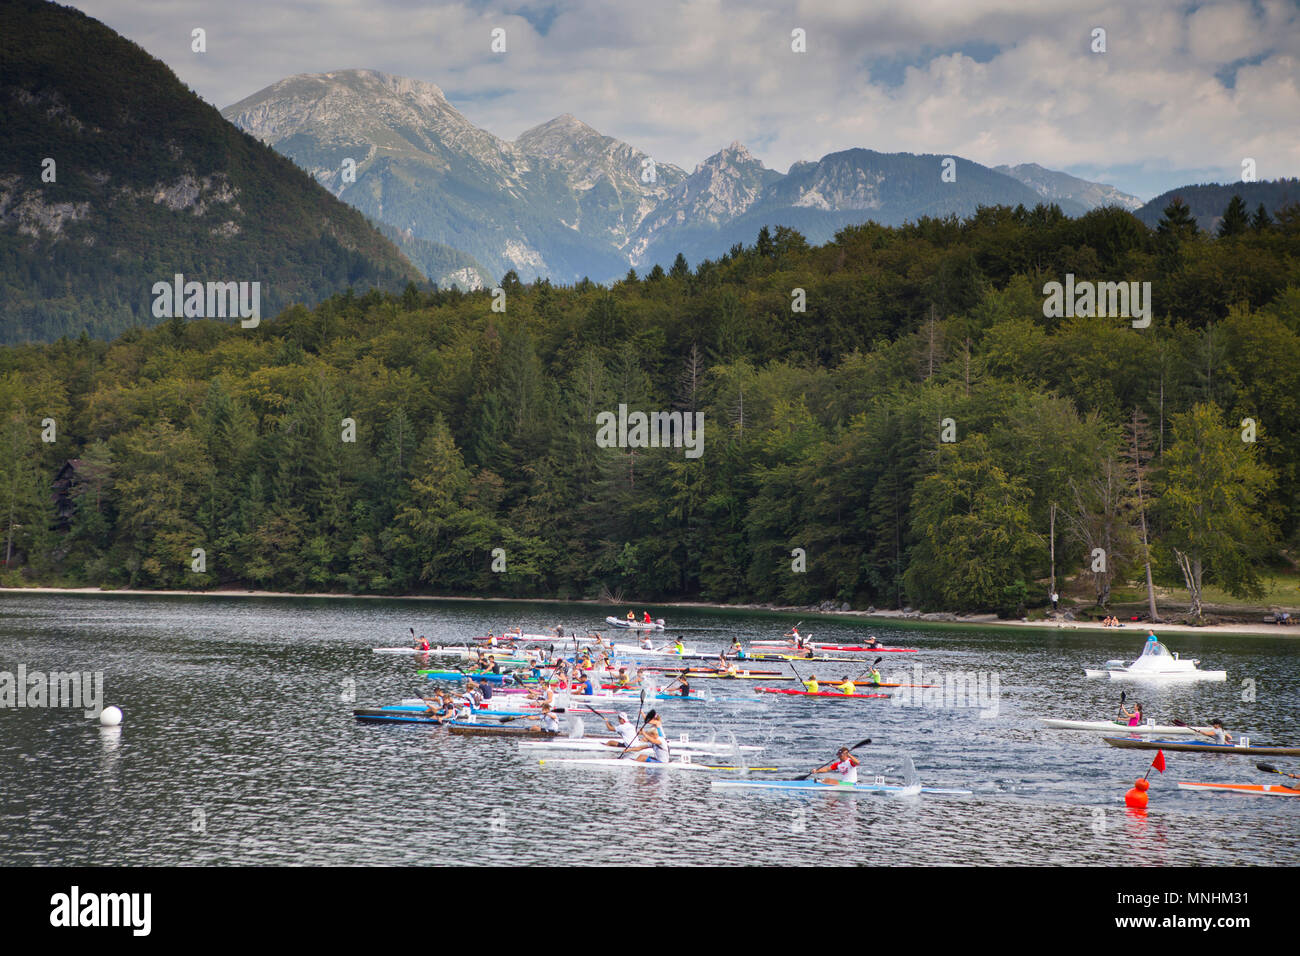 Start of canoe race at Lake Bohinj, largest permanent lake located in Bohinj Valley of Julian Alps, Triglav National Park, Slovenia Stock Photo